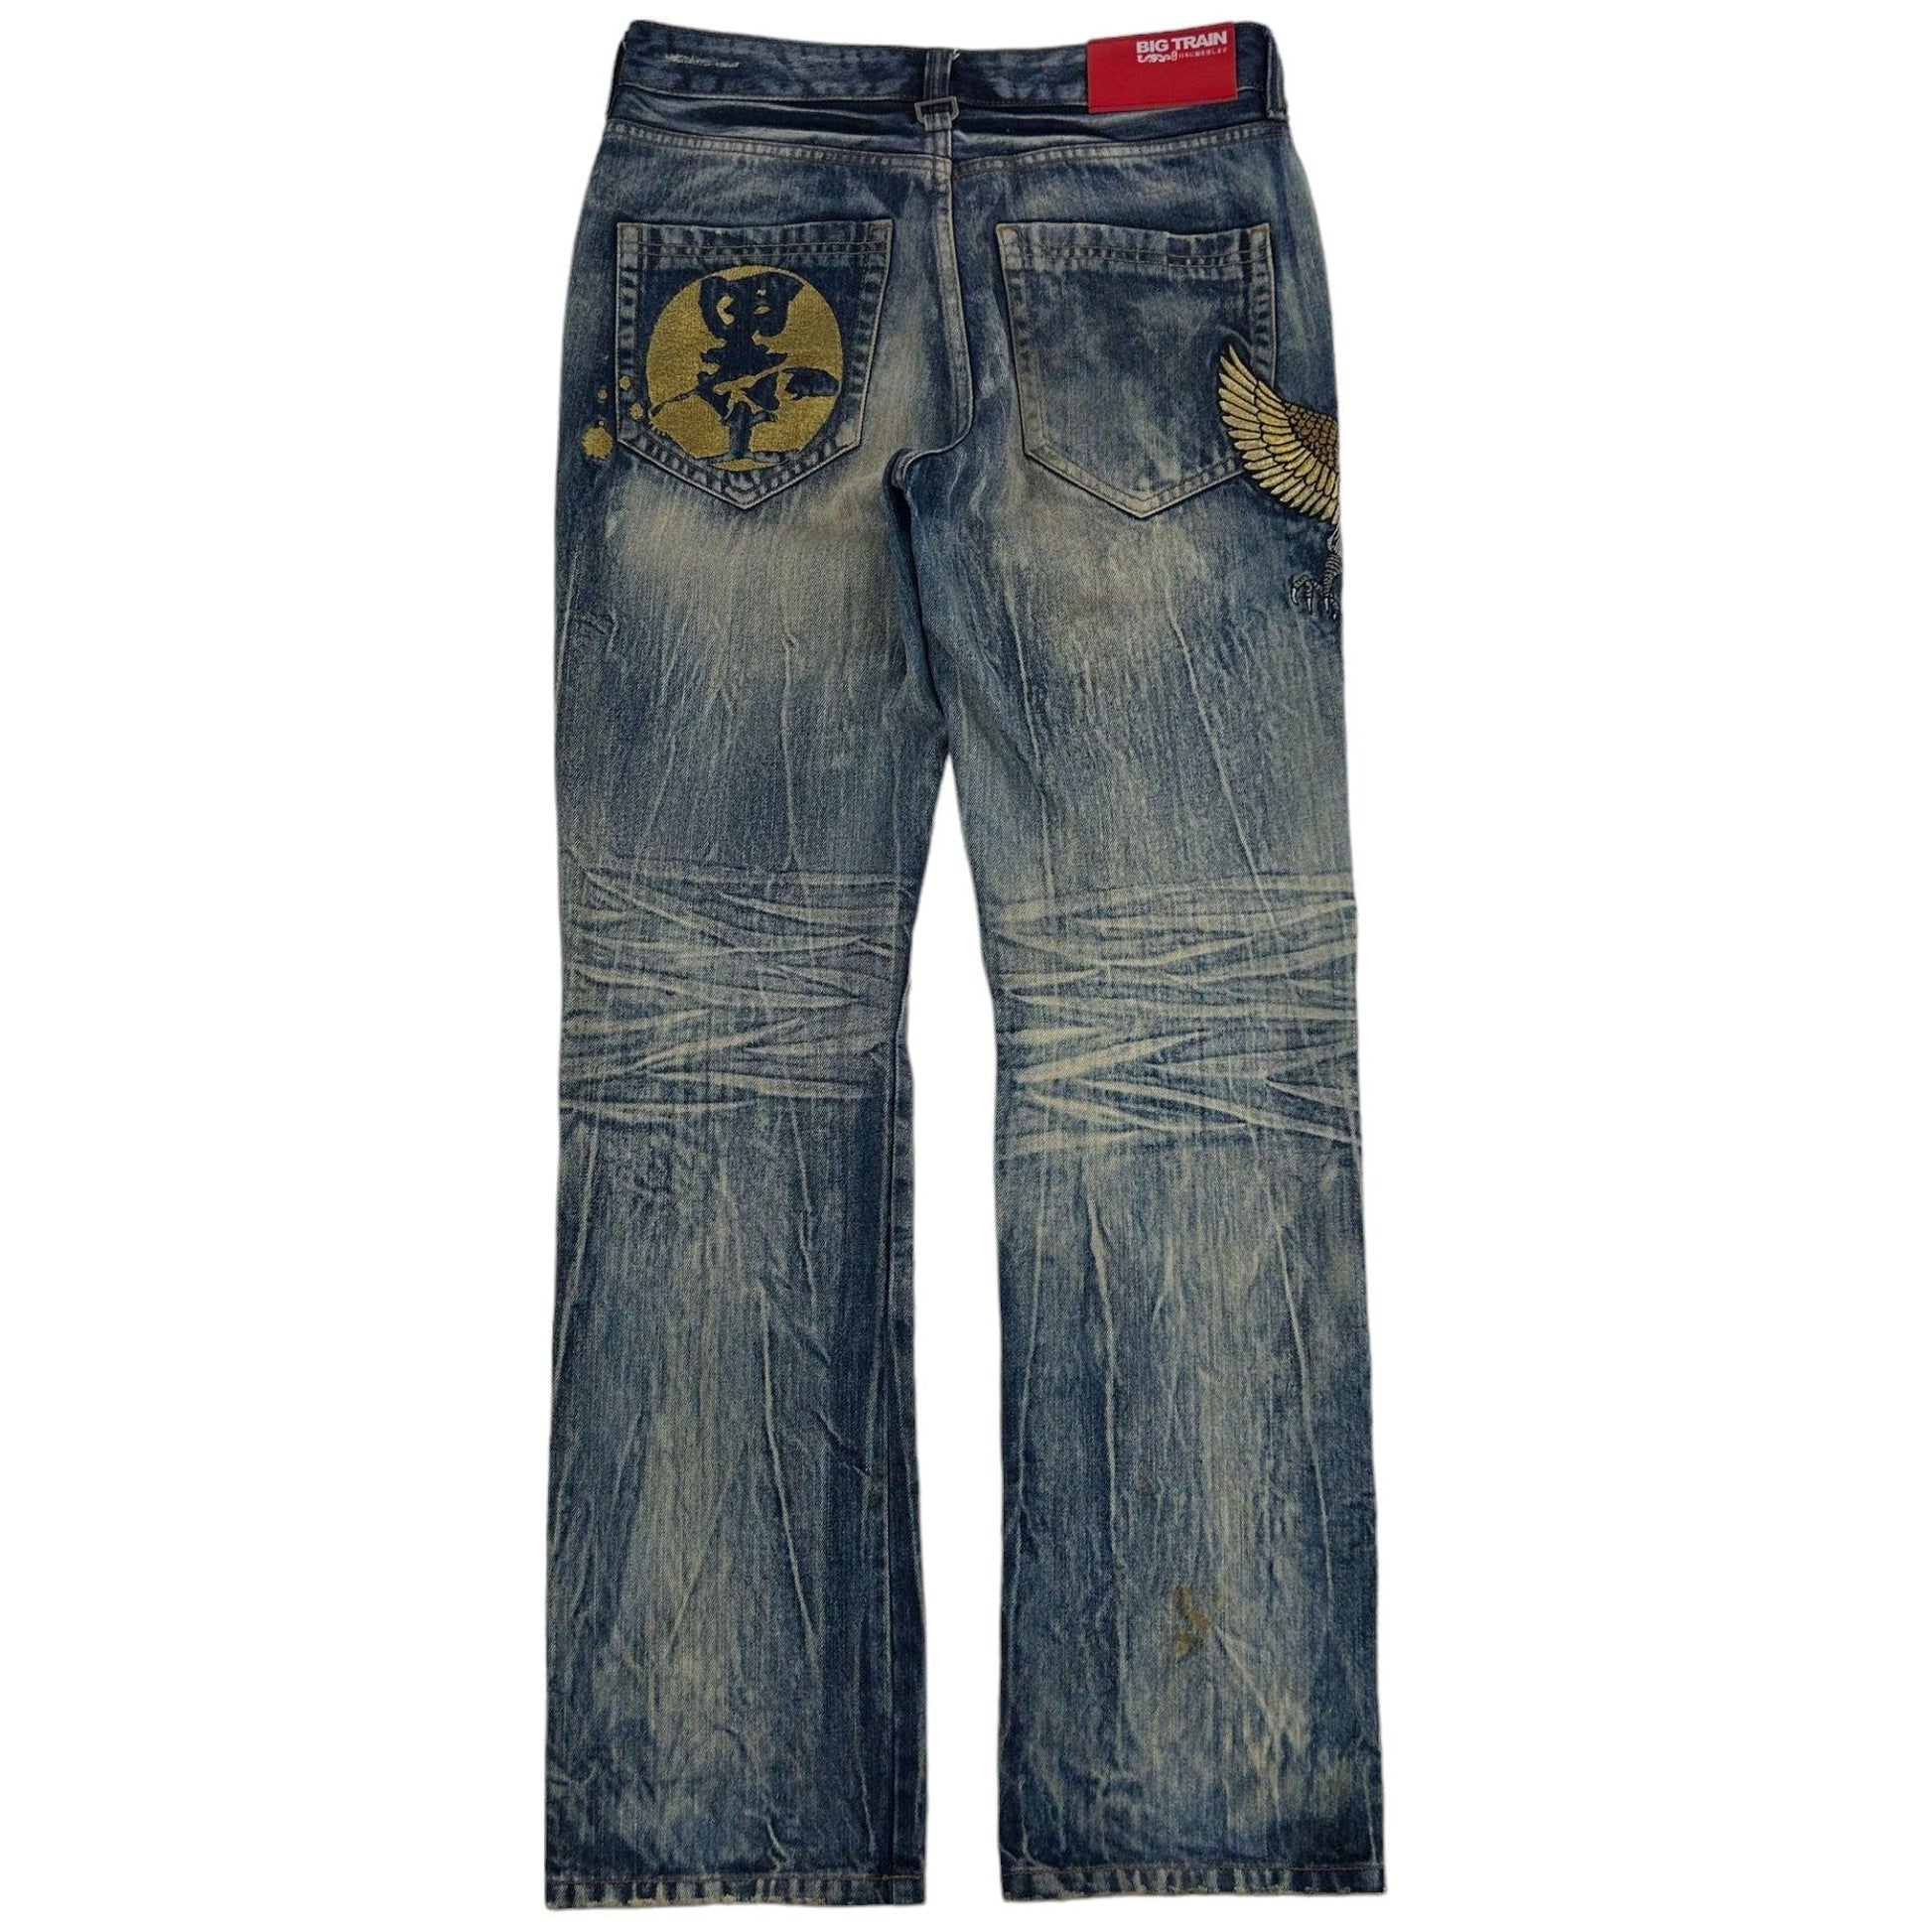 Vintage Eagle Japanese Denim Jeans Size W32 - Known Source